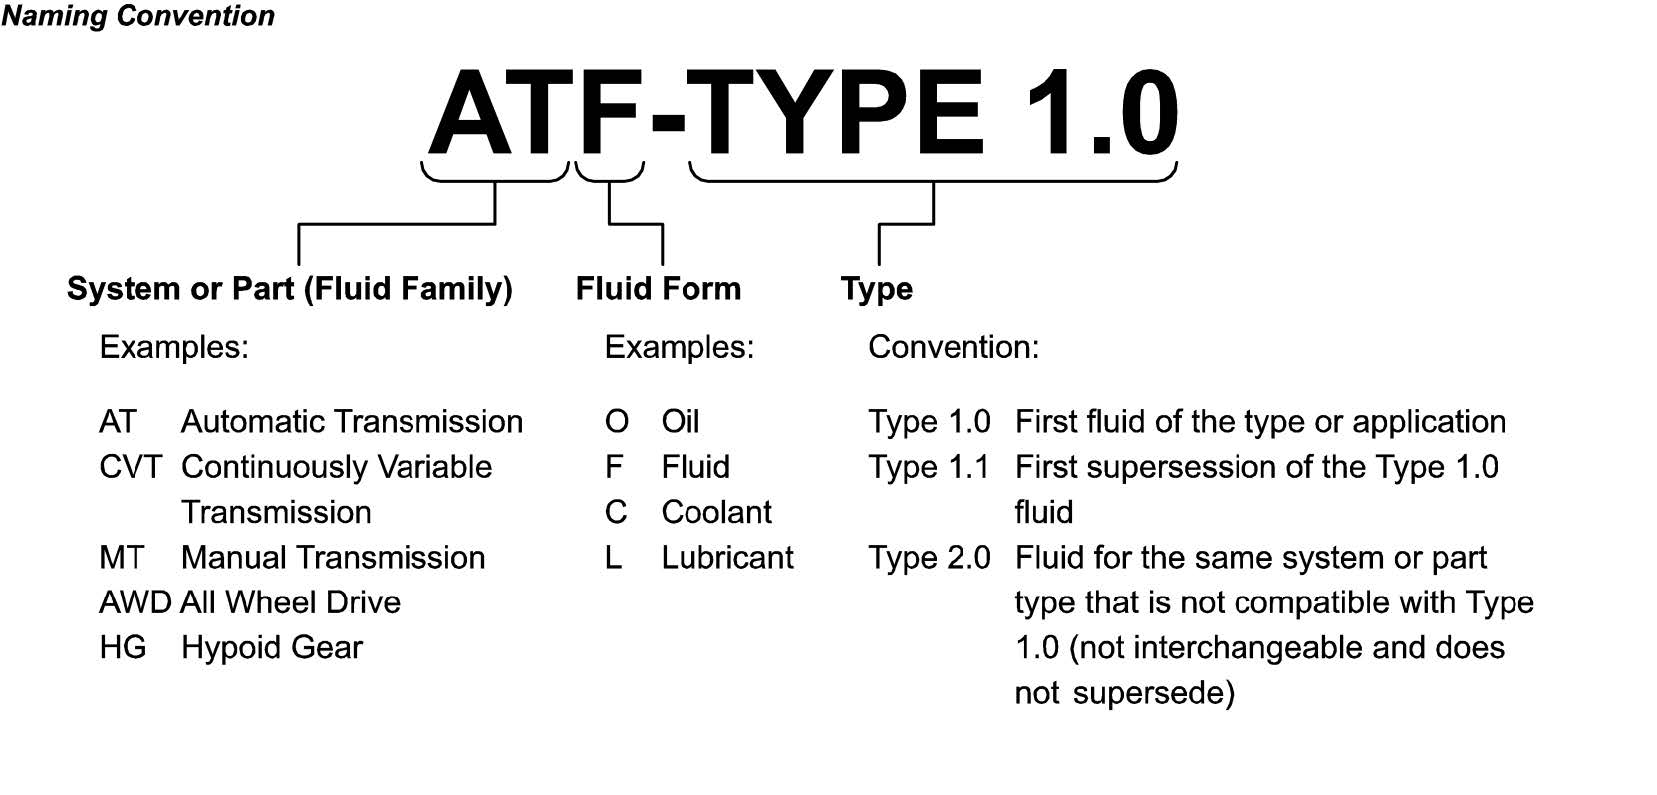 ATF-Type 3.1